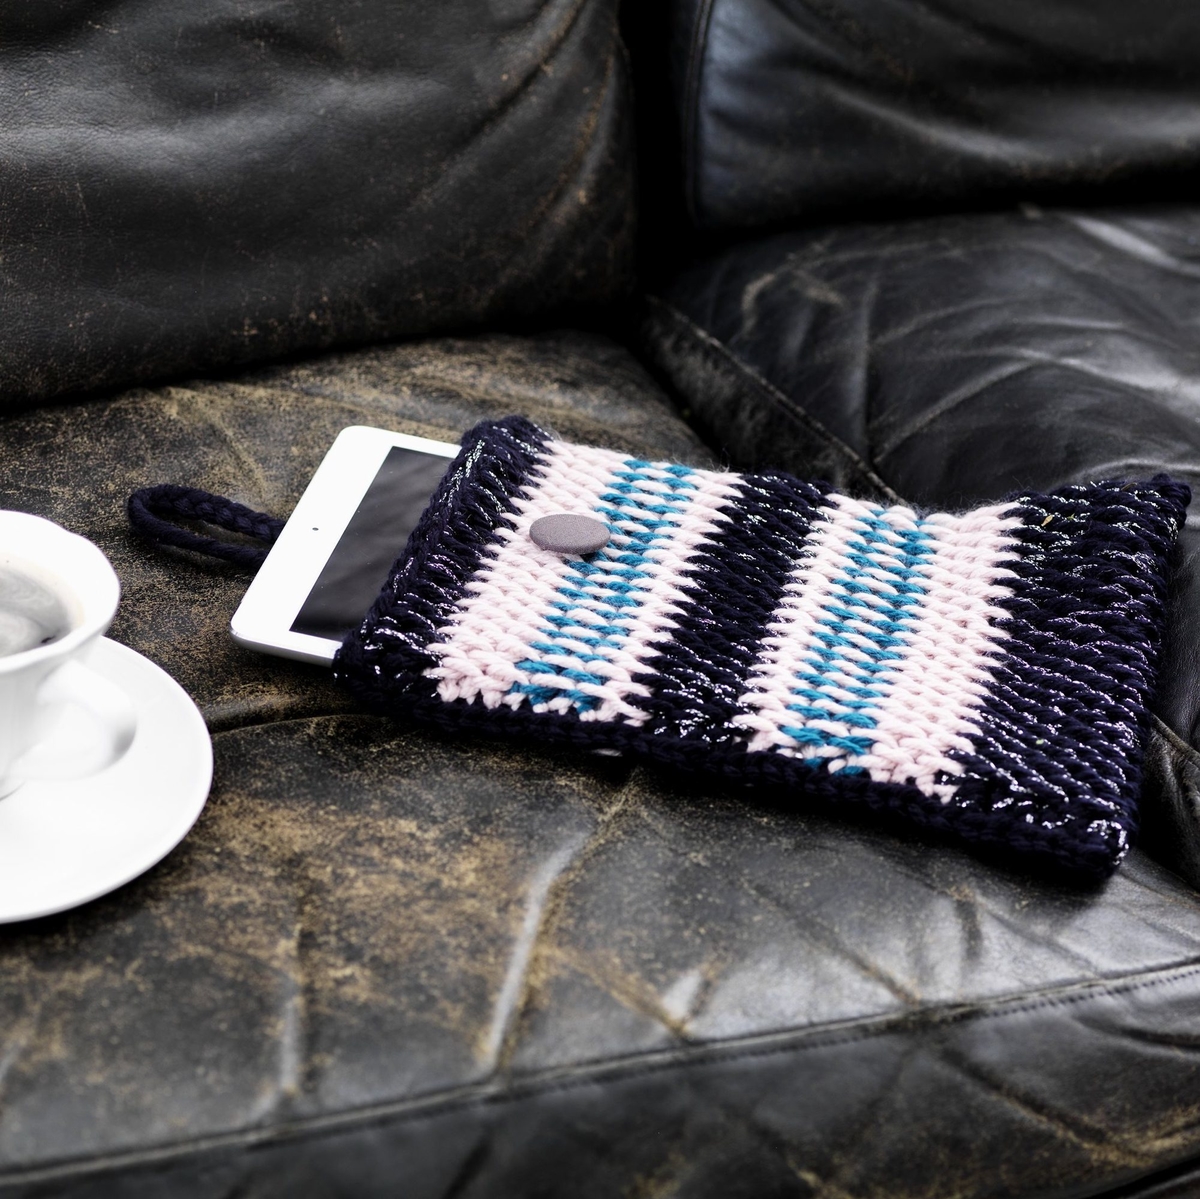 Crochet an iPad case